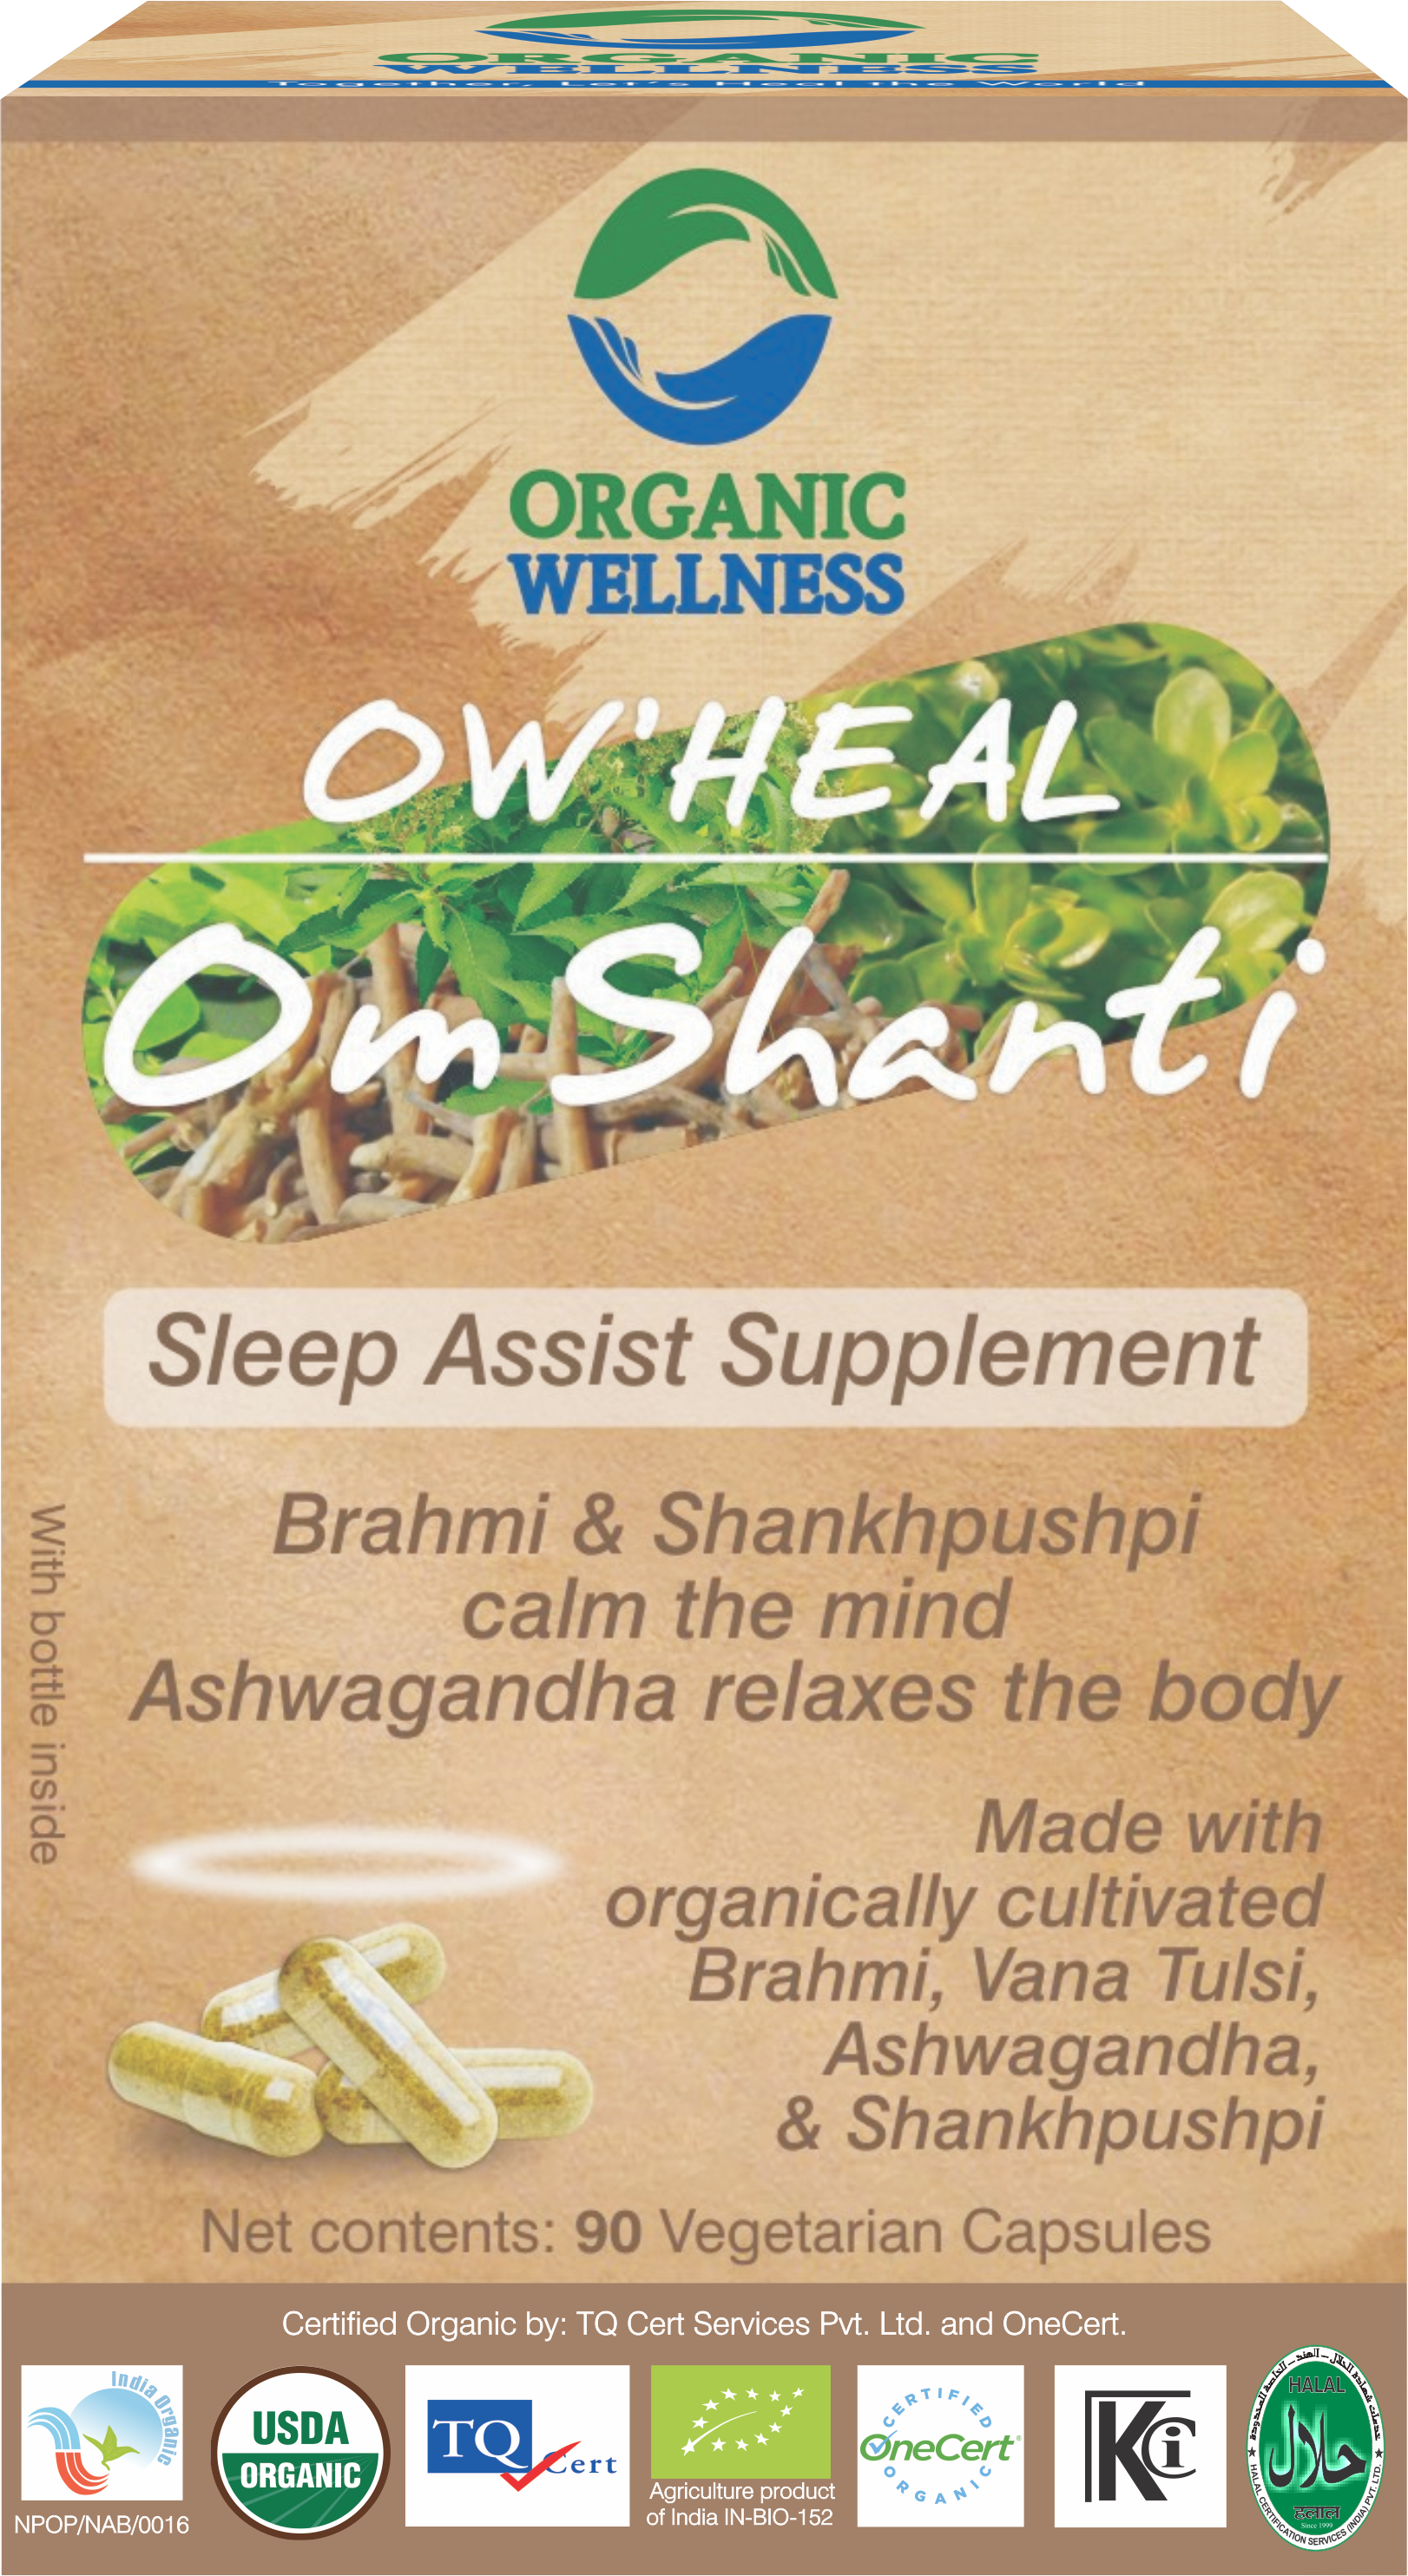 Buy Organic Wellness Heal Om Shanti Capsule at Best Price Online